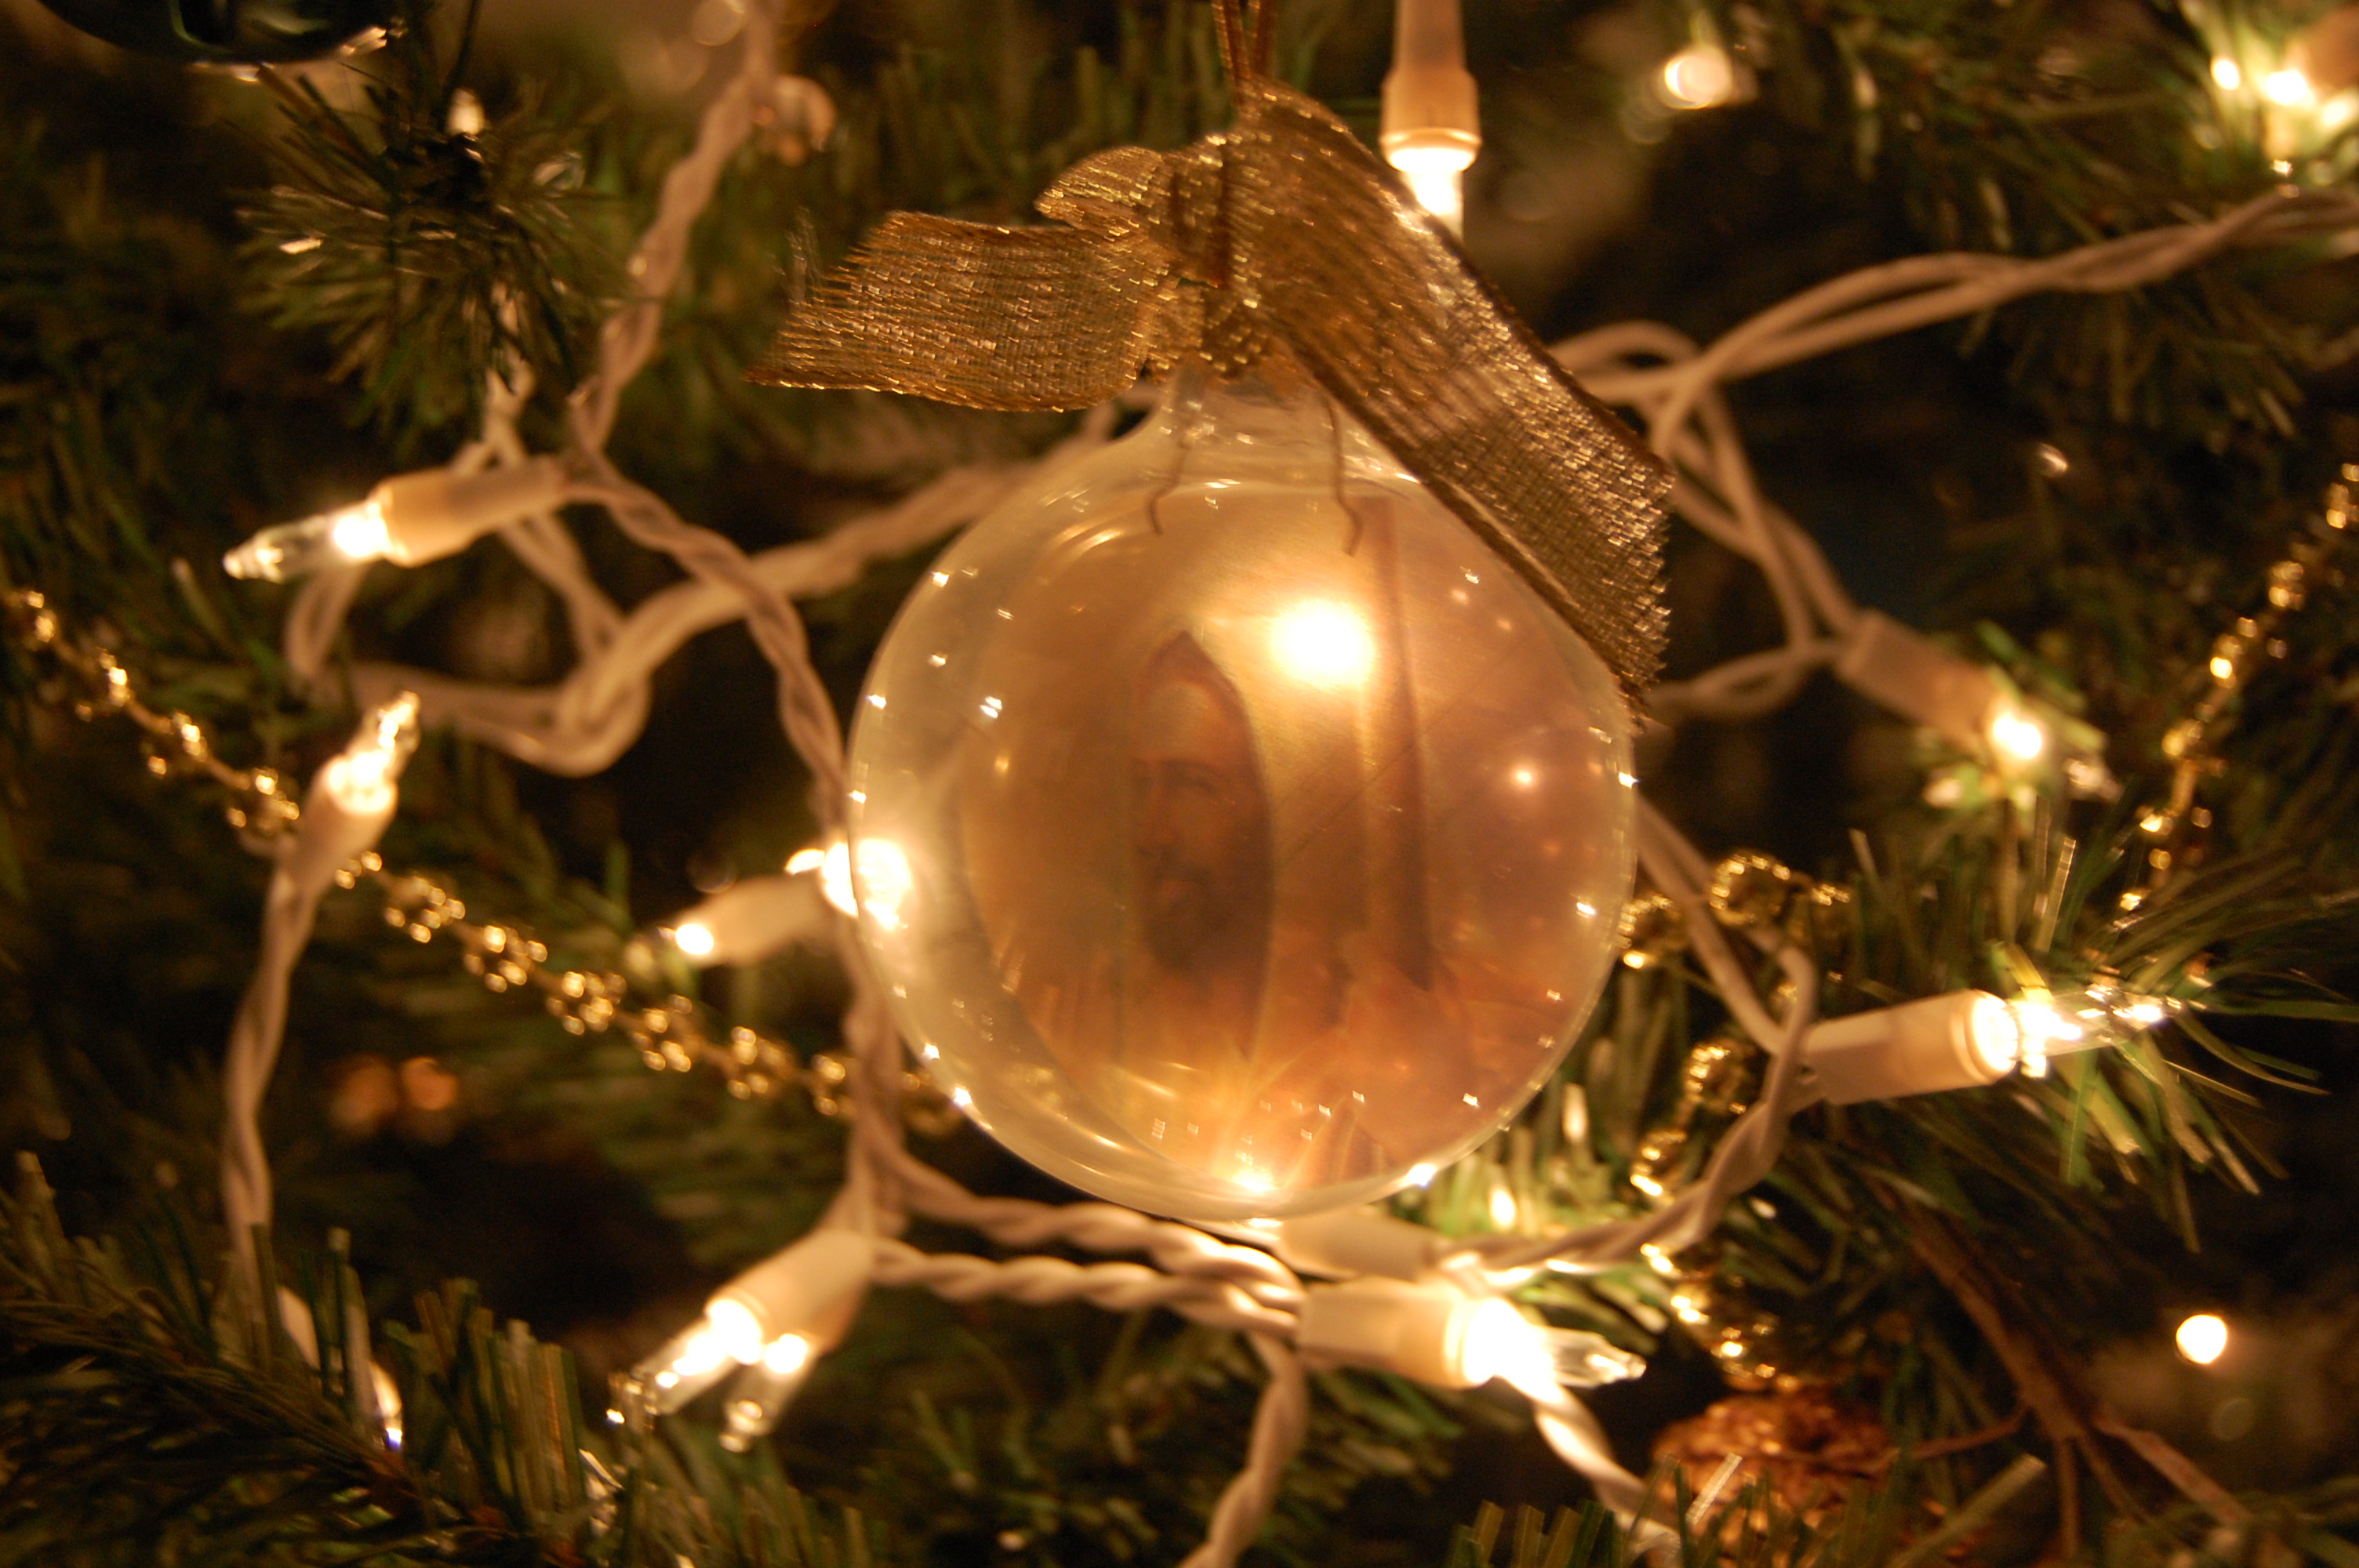 Christmas Music: When We Seek Him by Shawna Edwards and Angie Killian